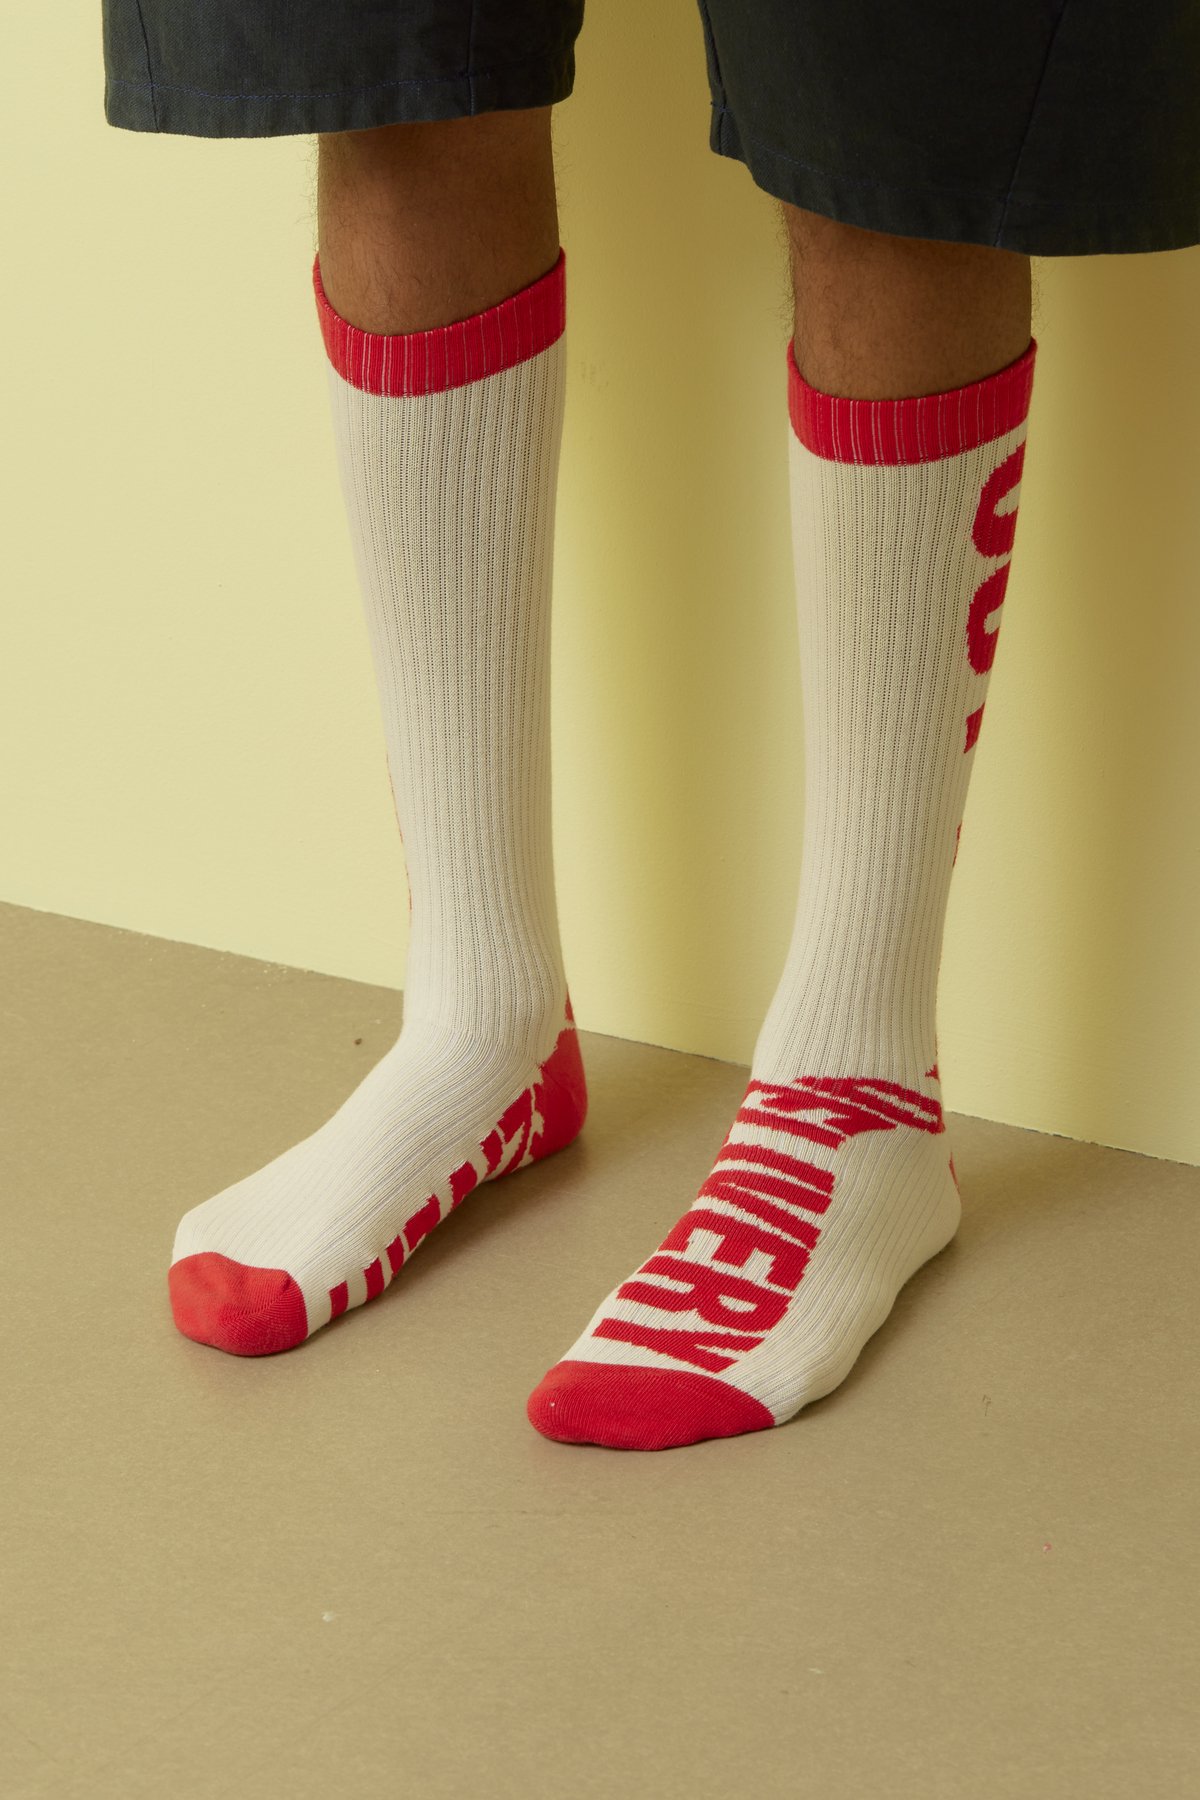 HENRIK VIBSKOV / Out for Delivery Socks Homme / Off White OFD Red